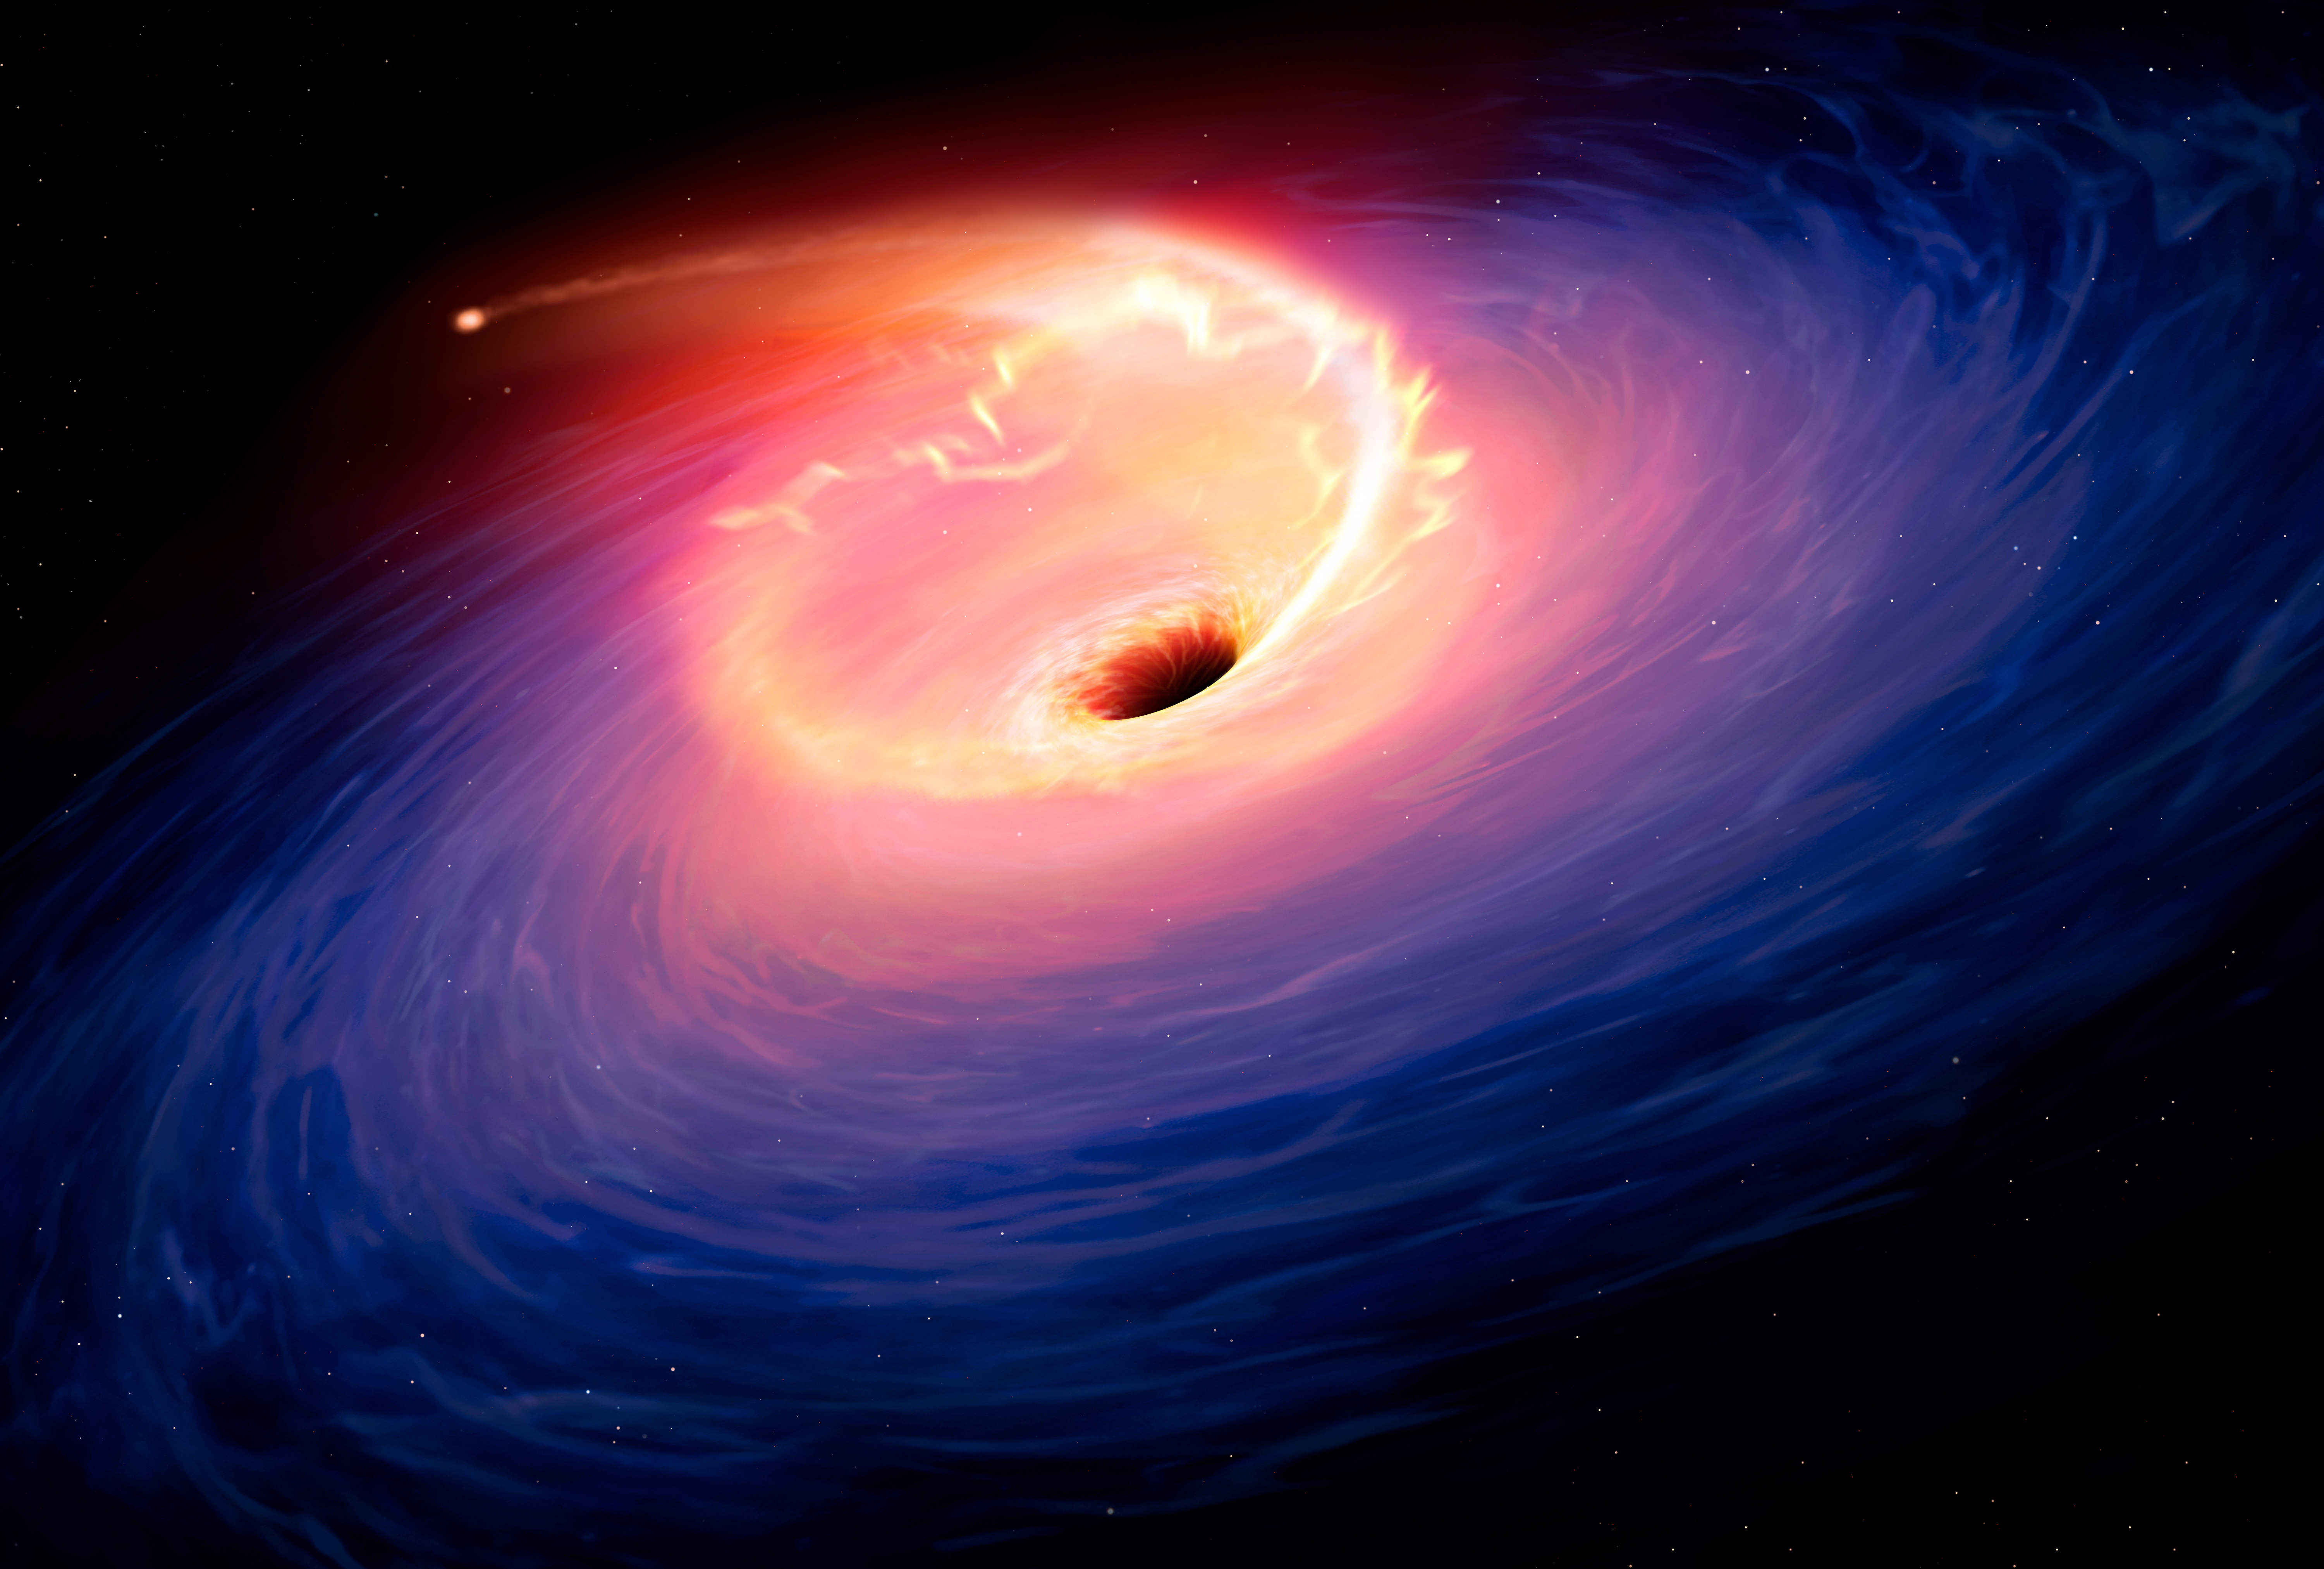 General 6000x4050 black holes galaxy Andromeda space stars planet nebula fire hole universe